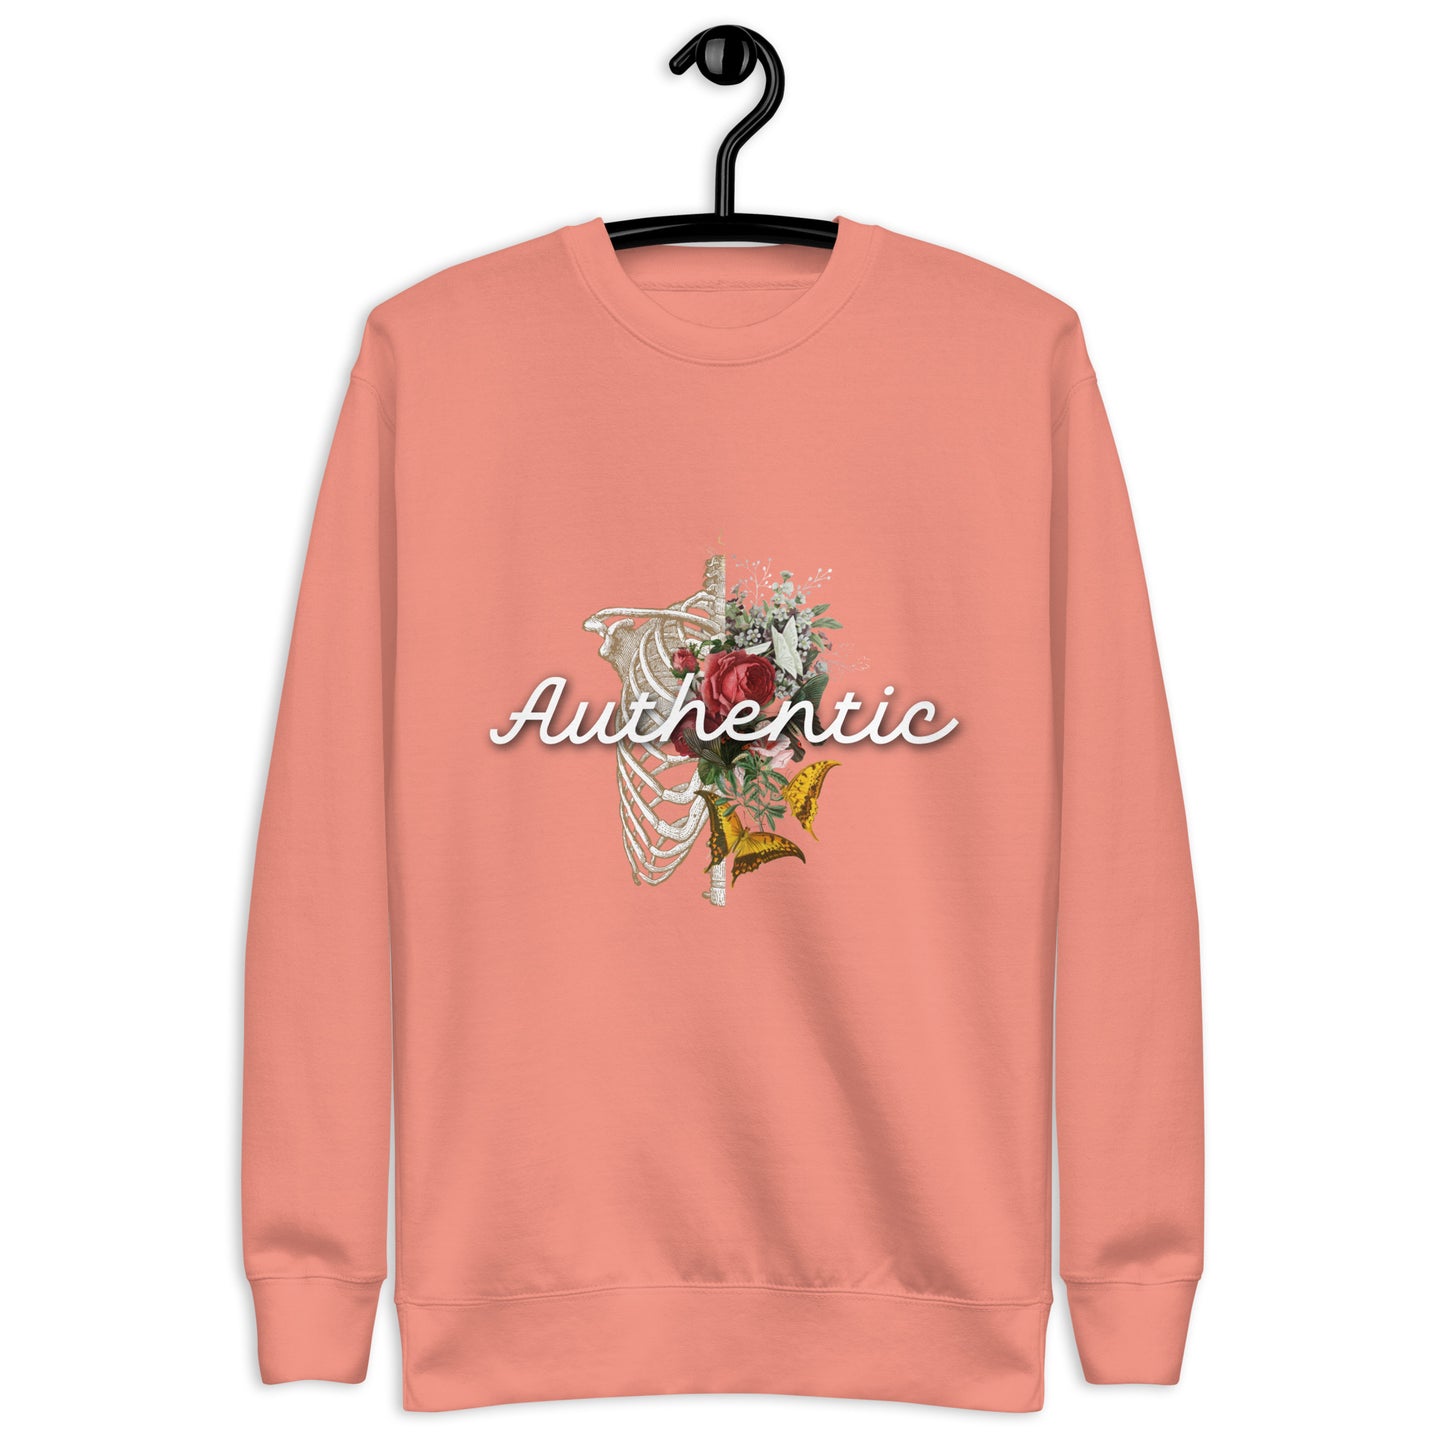 AUTHENTIC Sweatshirt